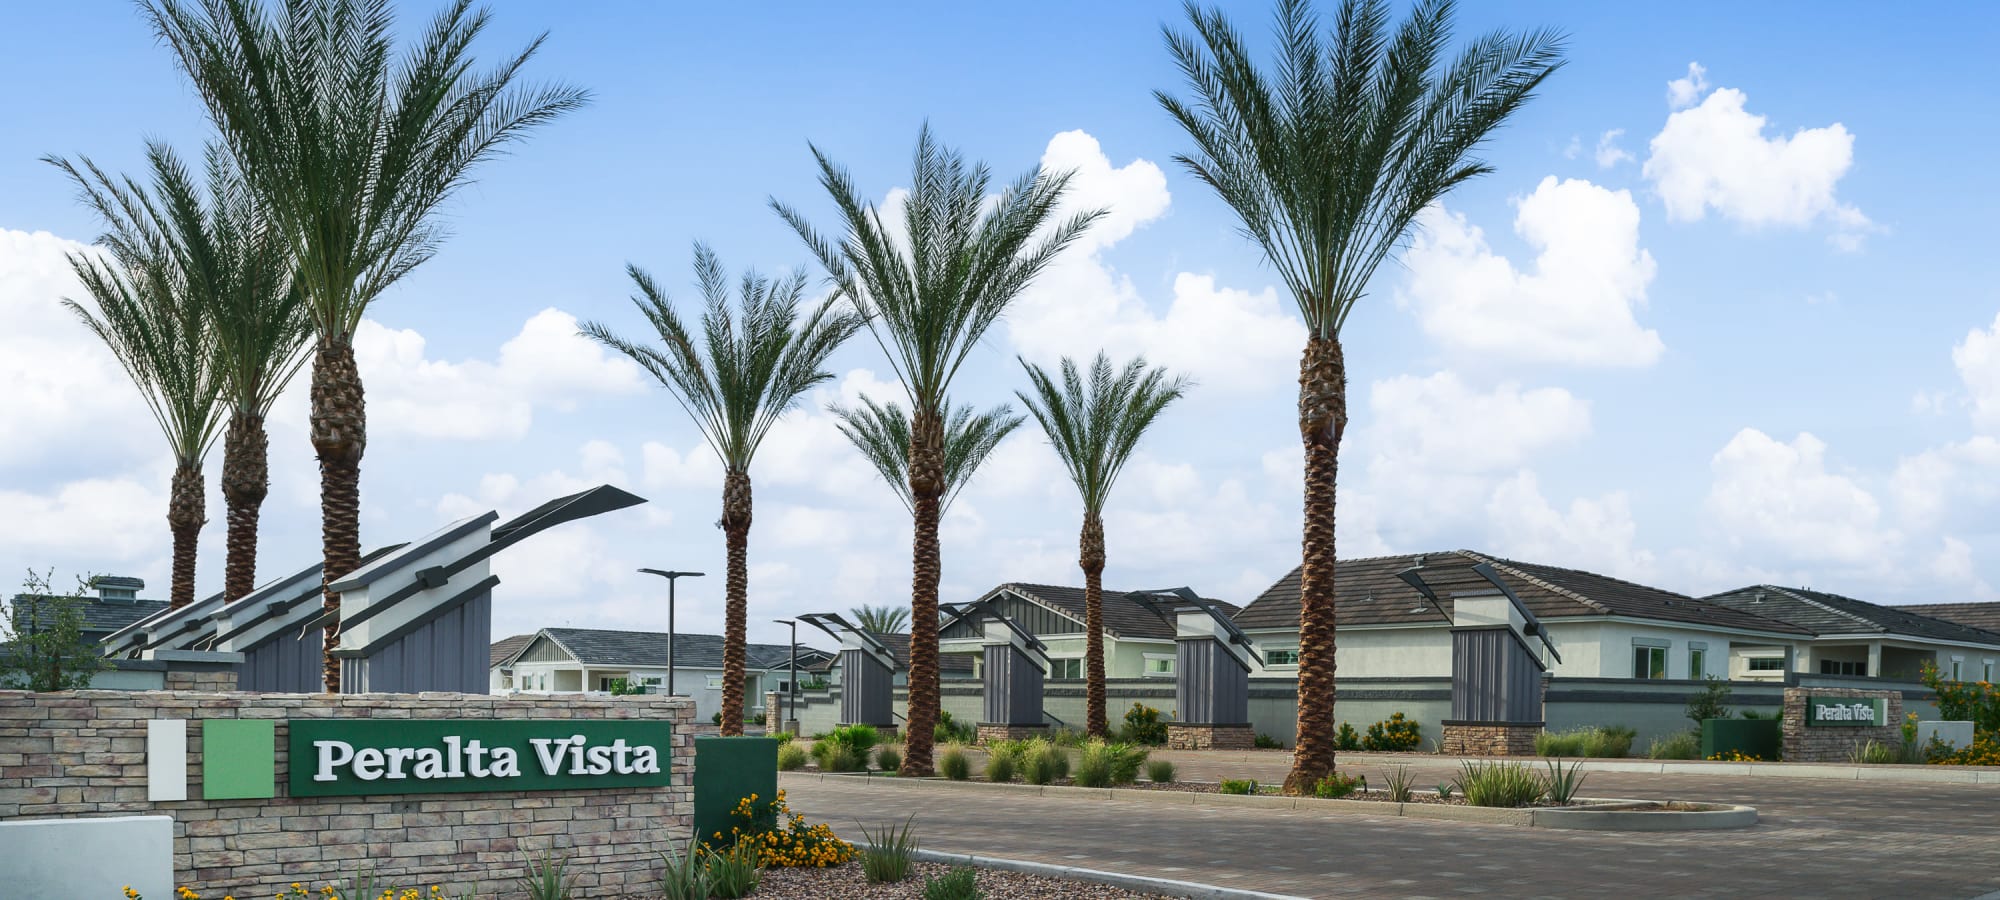 Community entrance at Peralta Vista in Mesa, Arizona